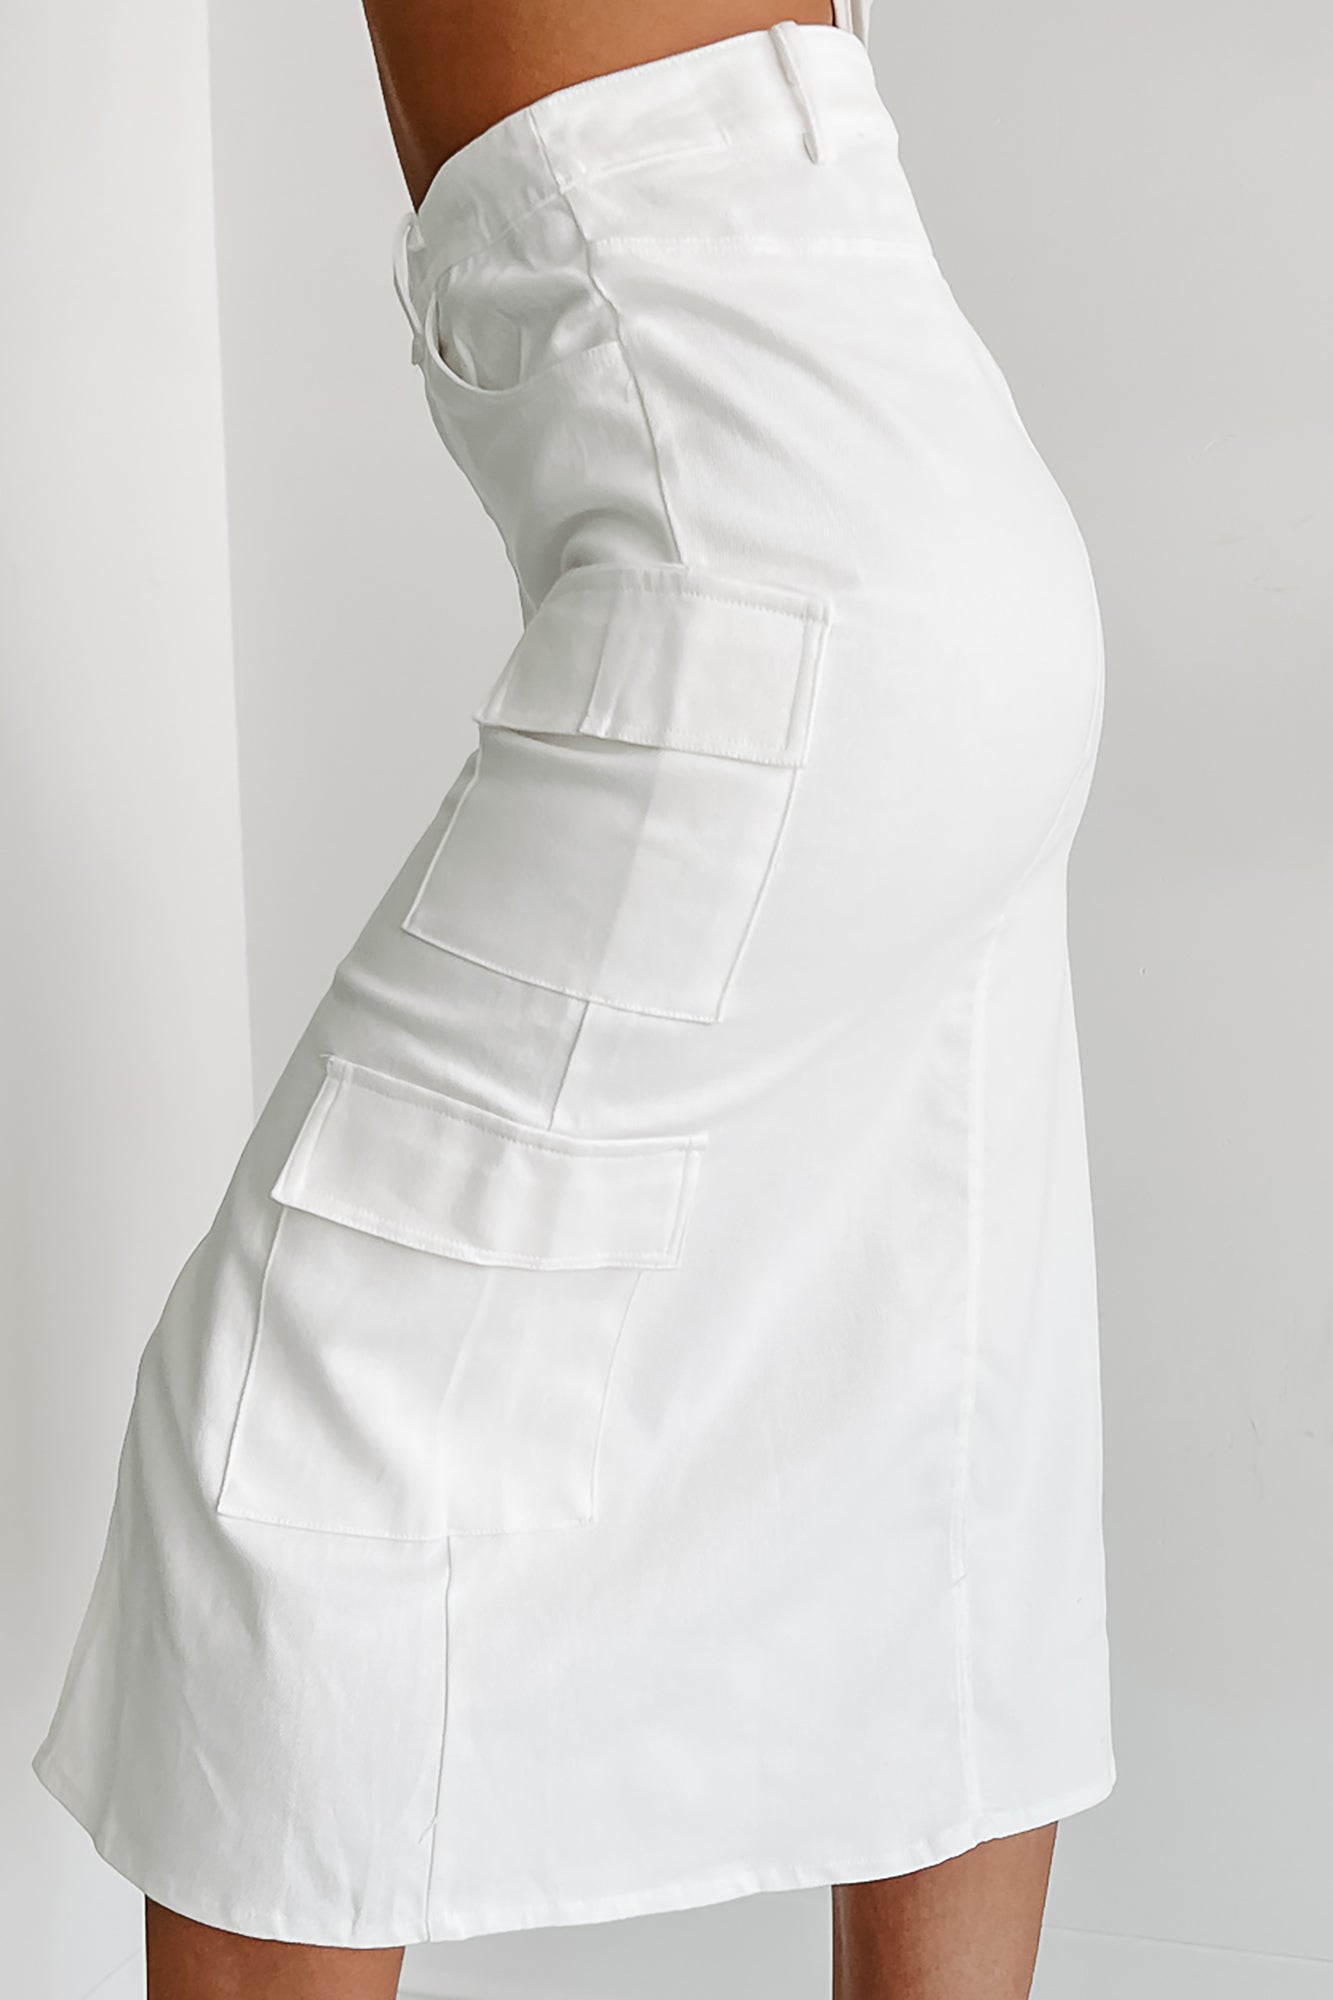 J. Crew Jeans Button Front White Denim Pencil Skirt Stretch Size 25 NWT  $63.99 | eBay